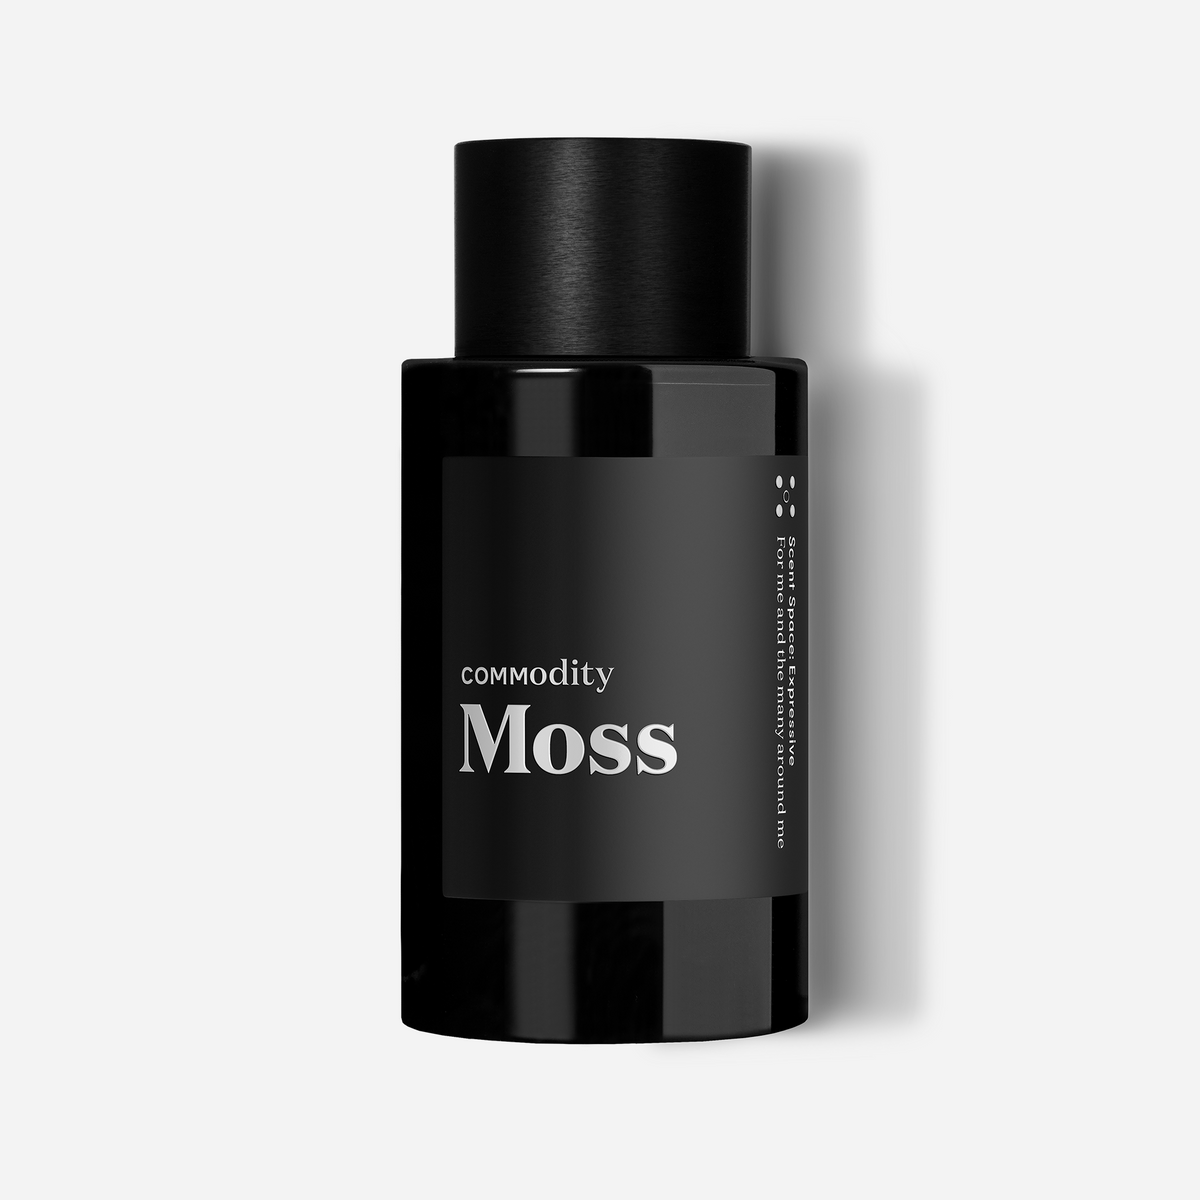 Moss – Commodity Fragrances (US)